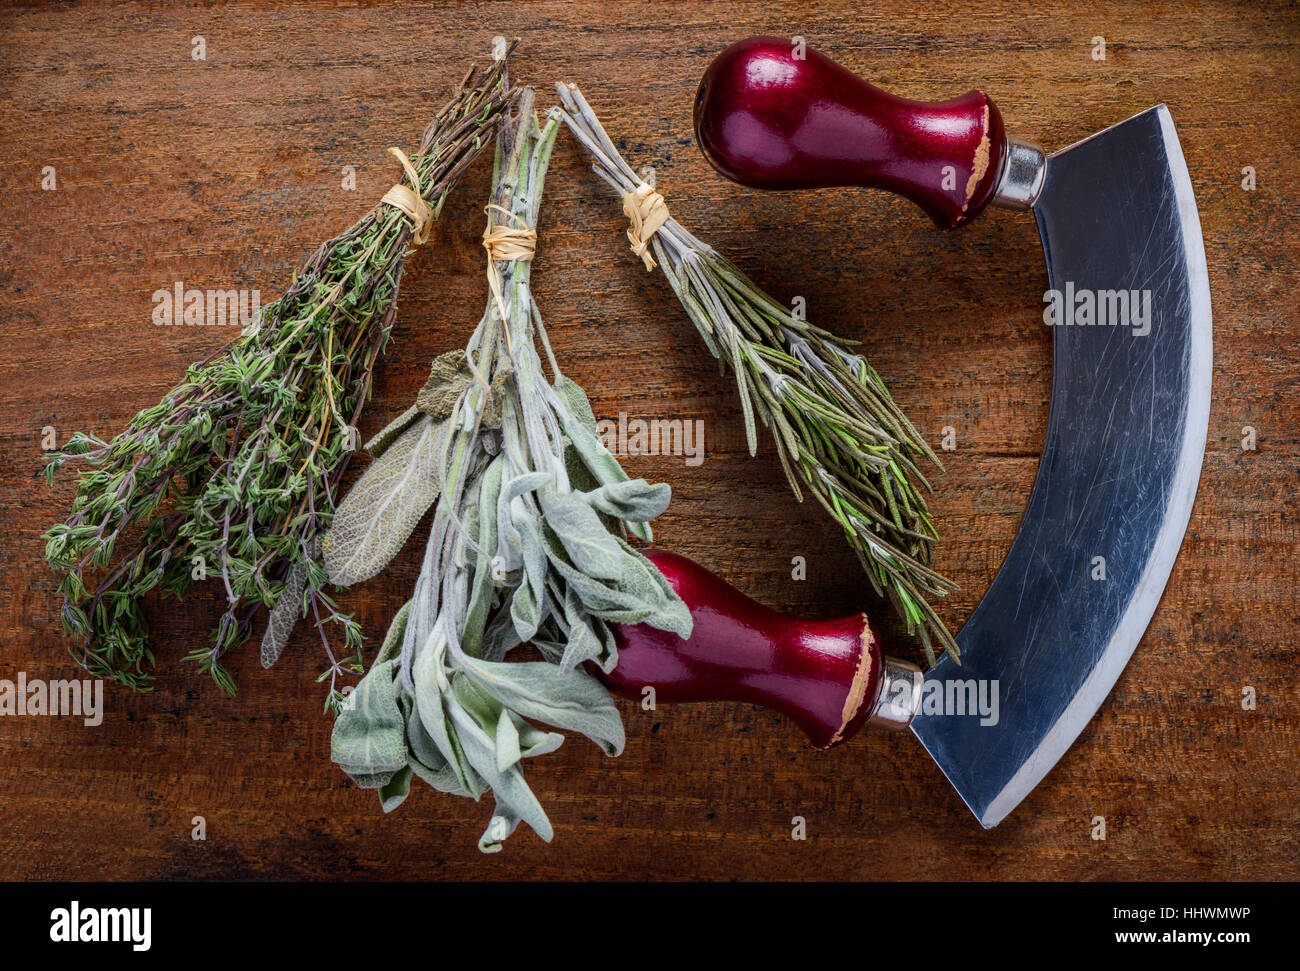 https://c8.alamy.com/comp/HHWMWP/mezzaluna-herb-chopper-with-sage-thyme-and-rosemary-culinary-herbs-HHWMWP.jpg